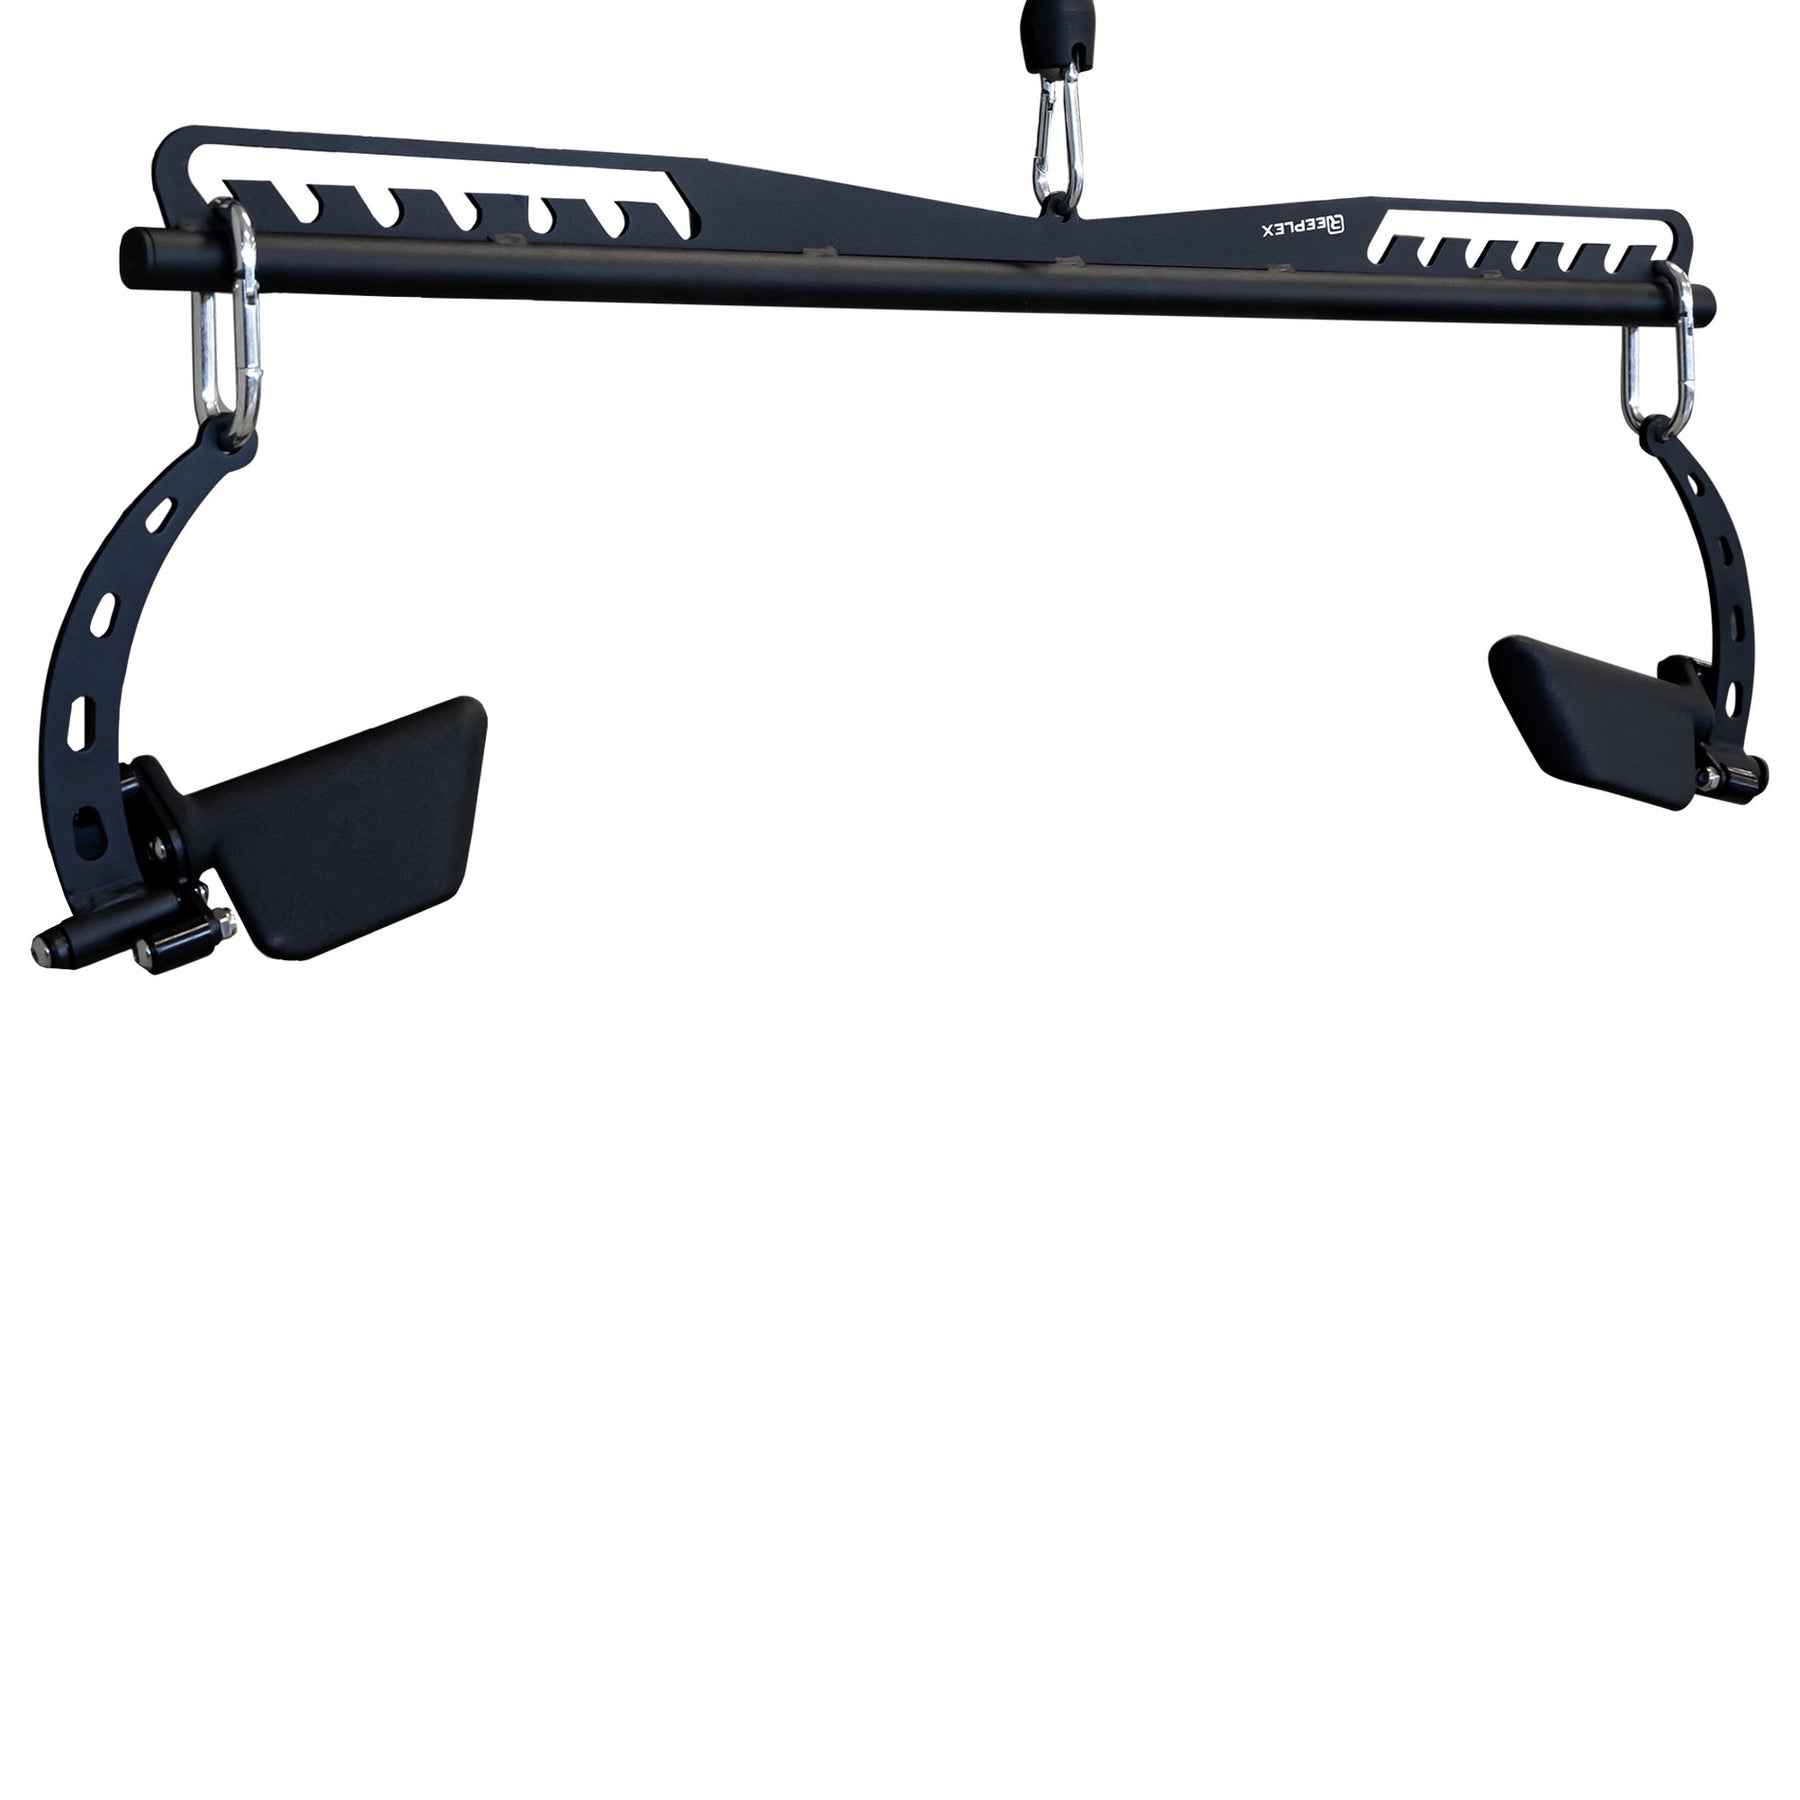 Reeplex 8 Piece Cable Attachment Set with Adjustable Neo Grip Handles